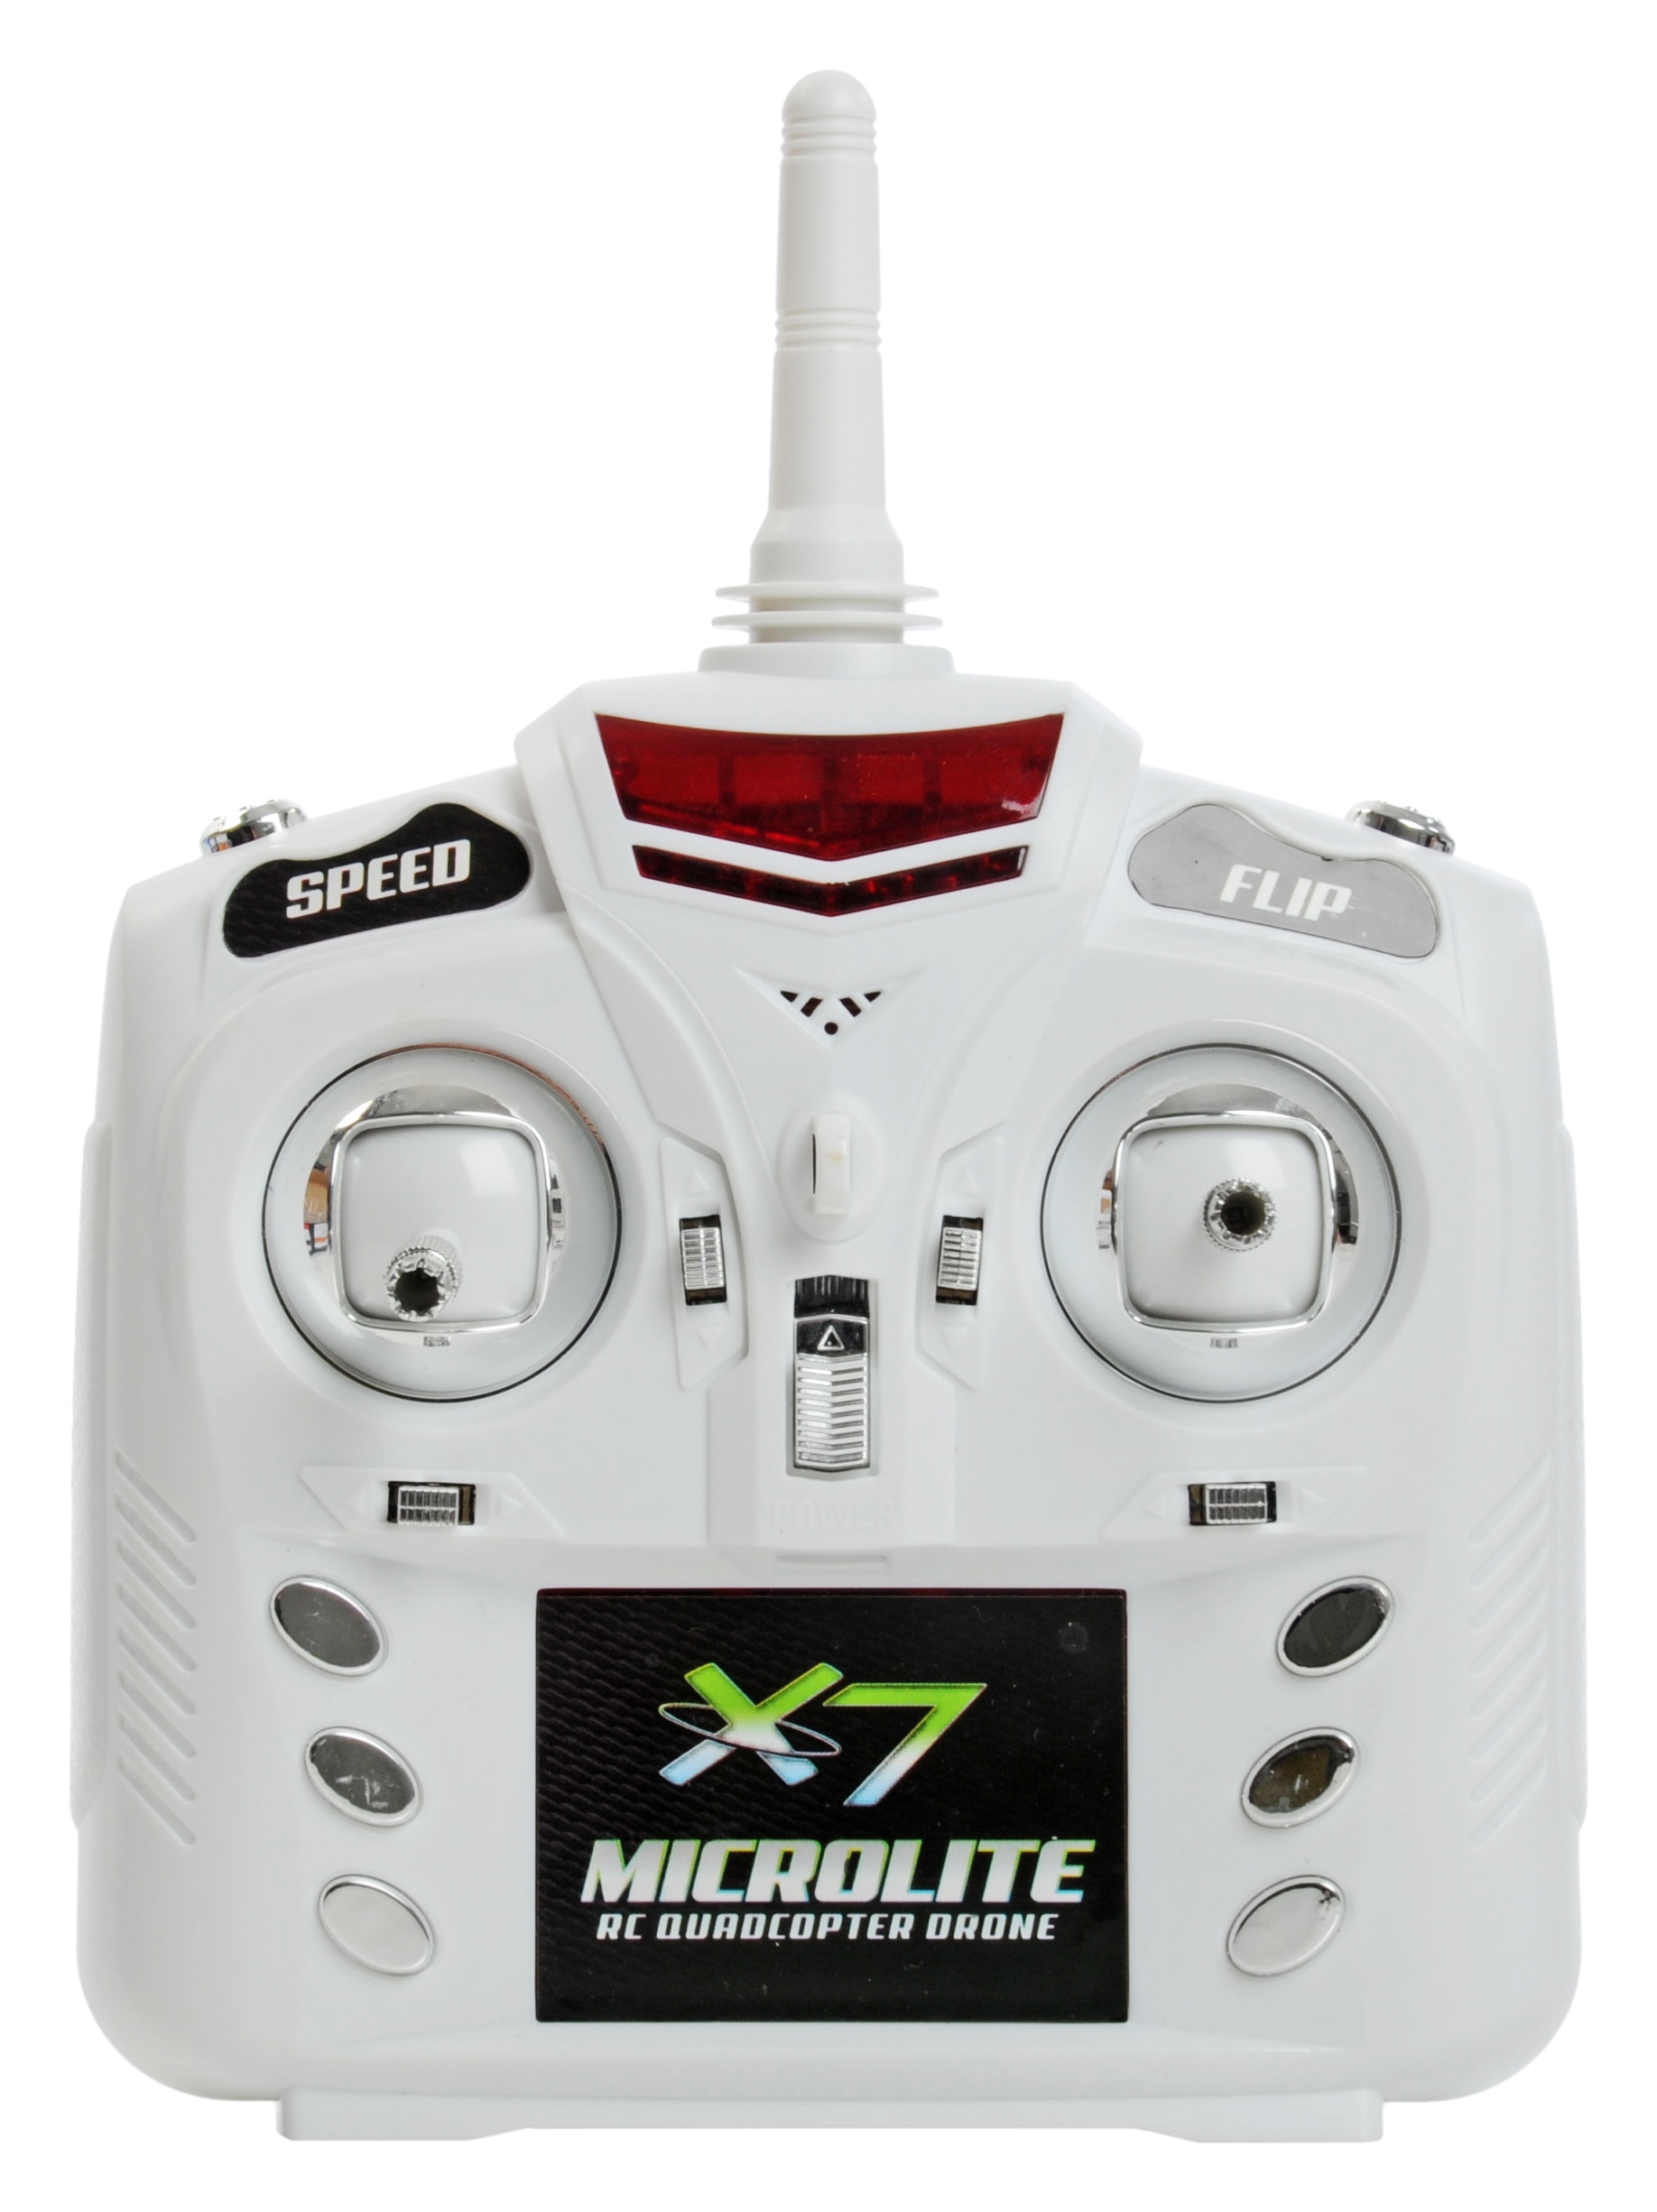 x7 microlite rc quadcopter drone